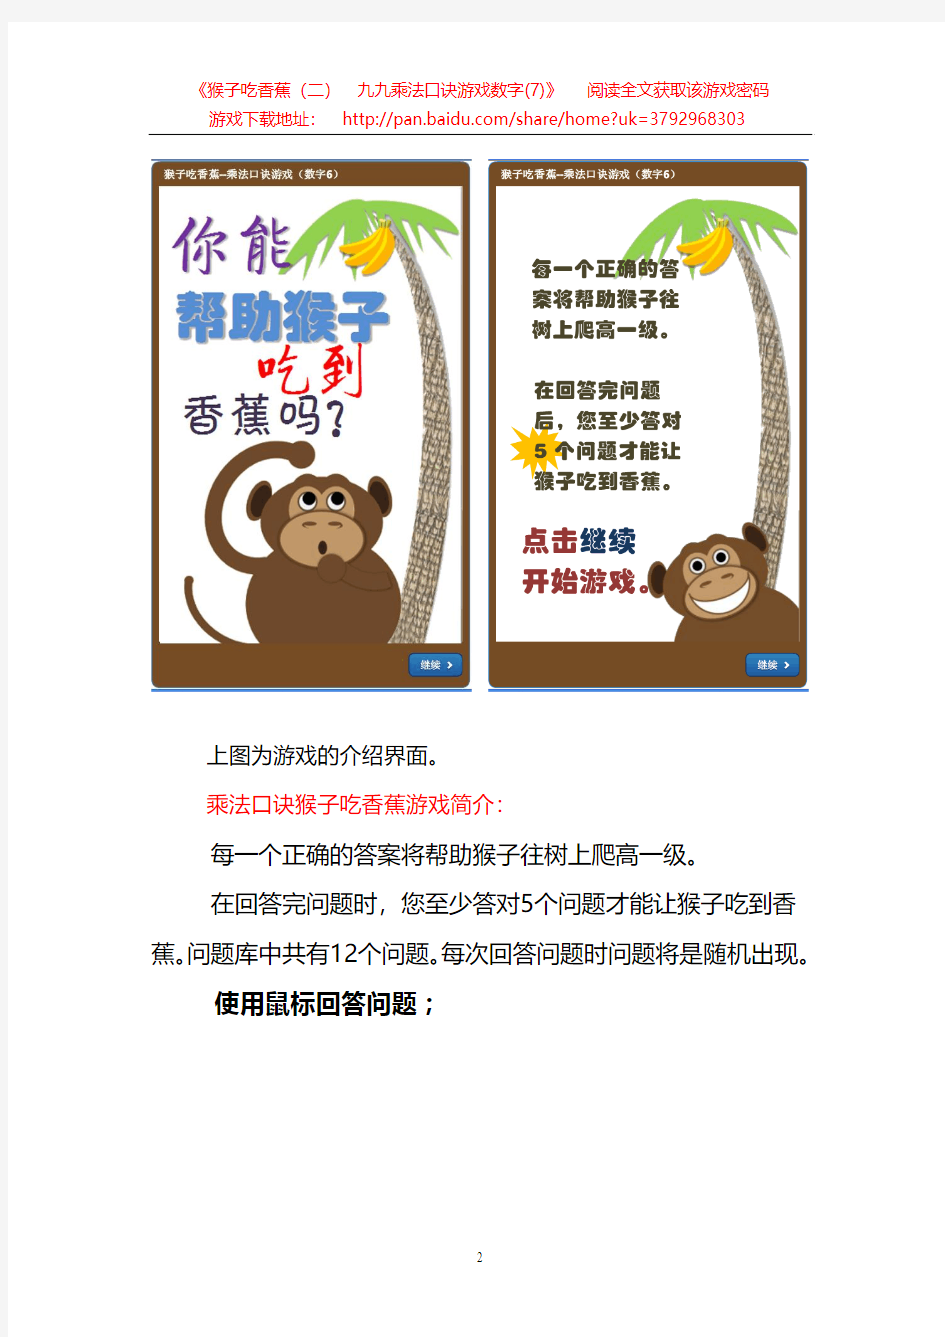 Articulate Storyline精彩课件(二)   猴子吃香蕉之九九乘法口诀游戏(数字7)